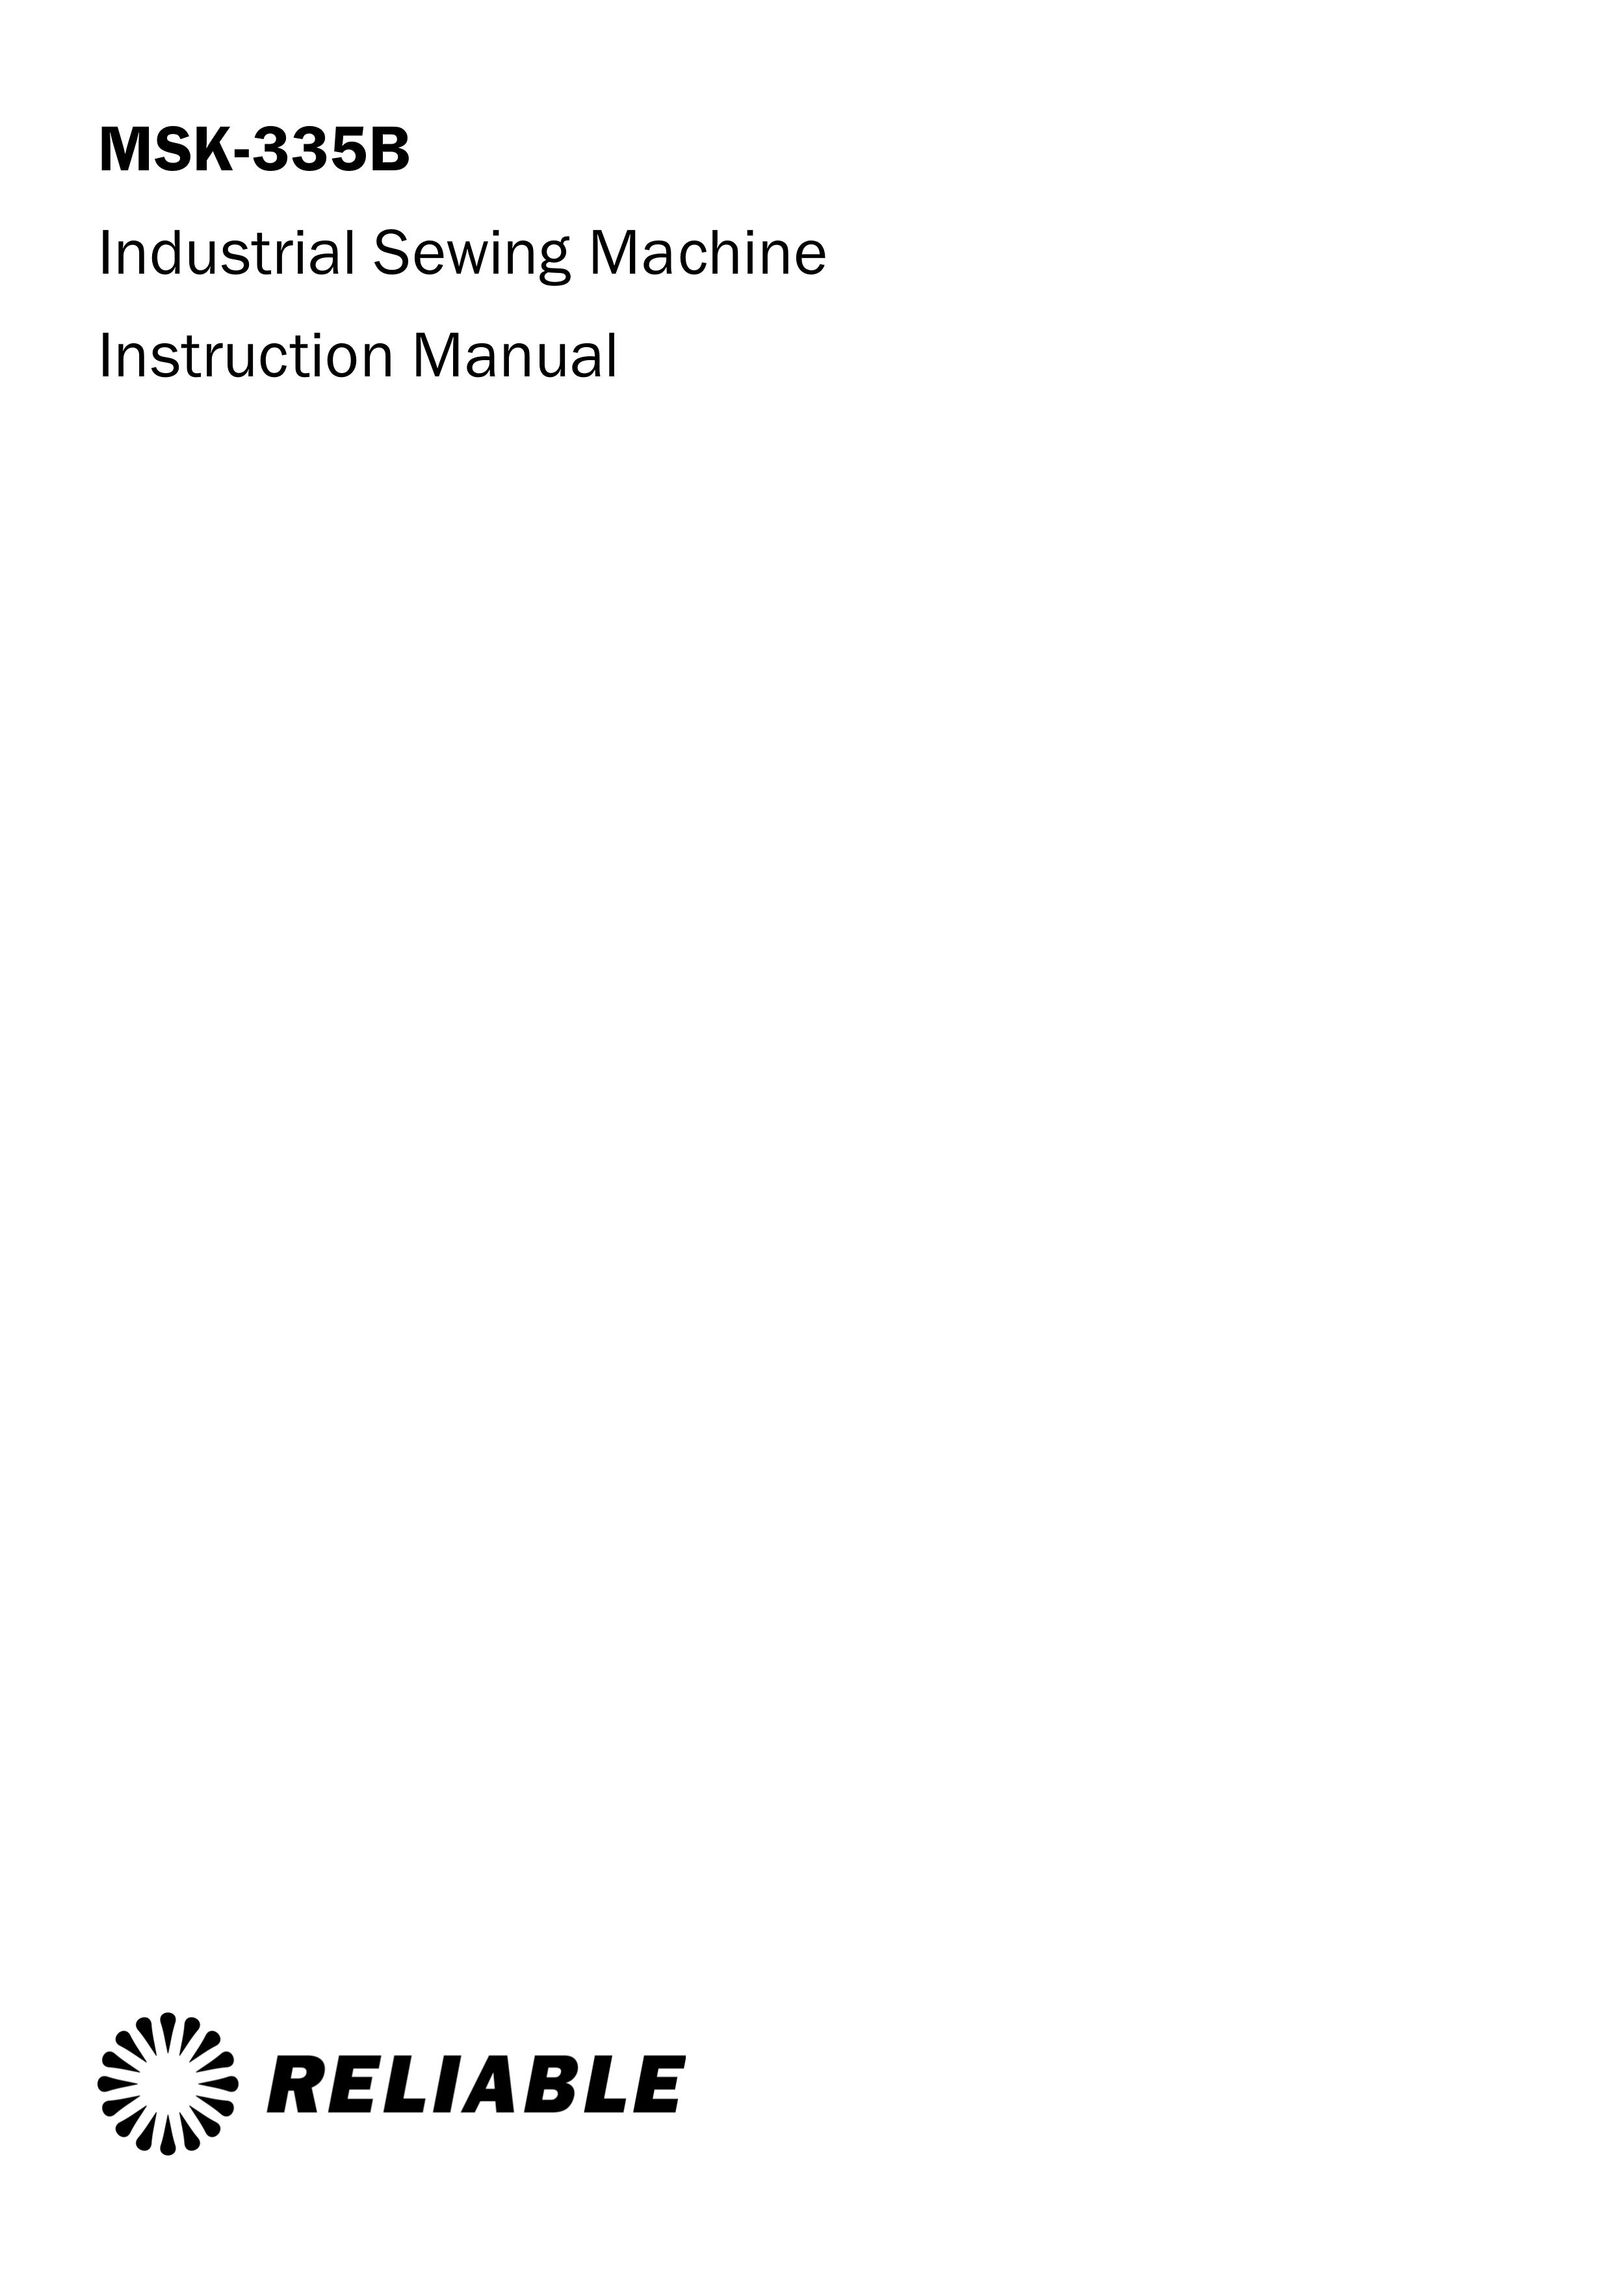 Reliable MSK-335B Sewing Machine User Manual